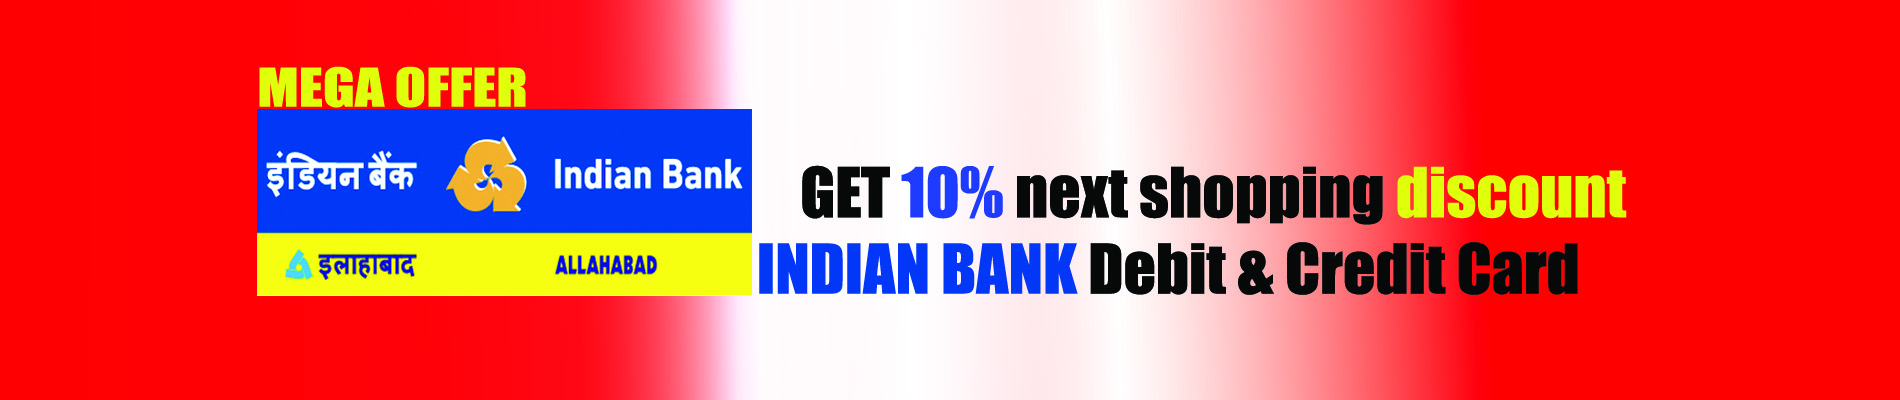 Indian Bank Offer